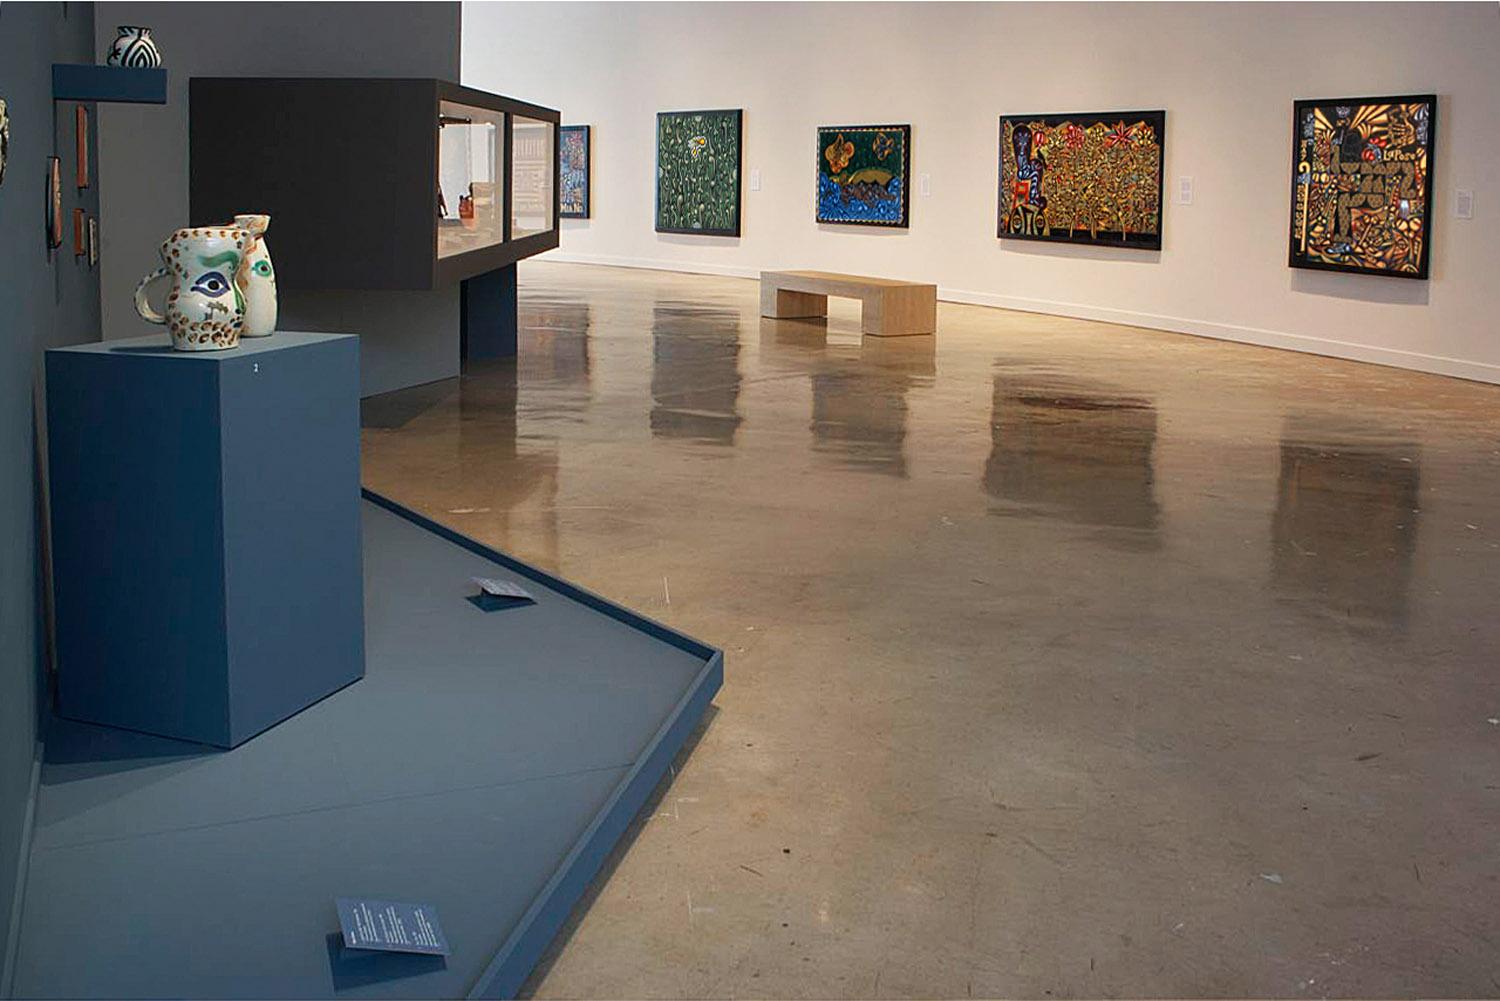 Pablo Picasso Ceramics | Carlos Luna Paintings; Museum of Art | Fort Lauderdale, Fort Lauderdale, FL, 2008